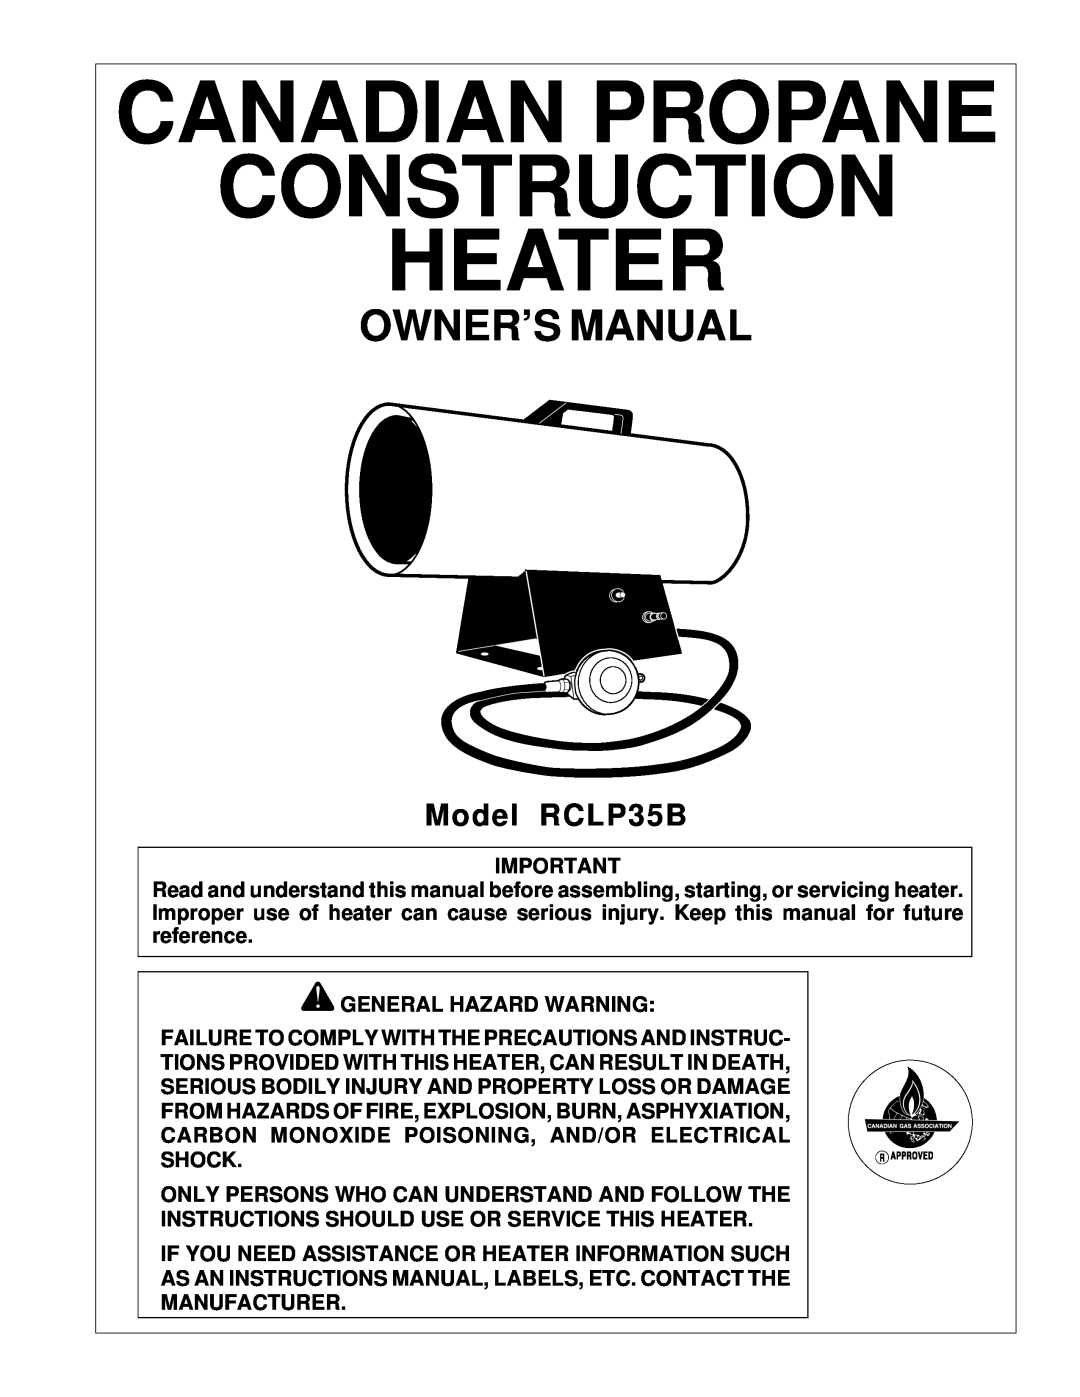 Desa owner manual Canadian Propane Construction Heater, Model RCLP35B 